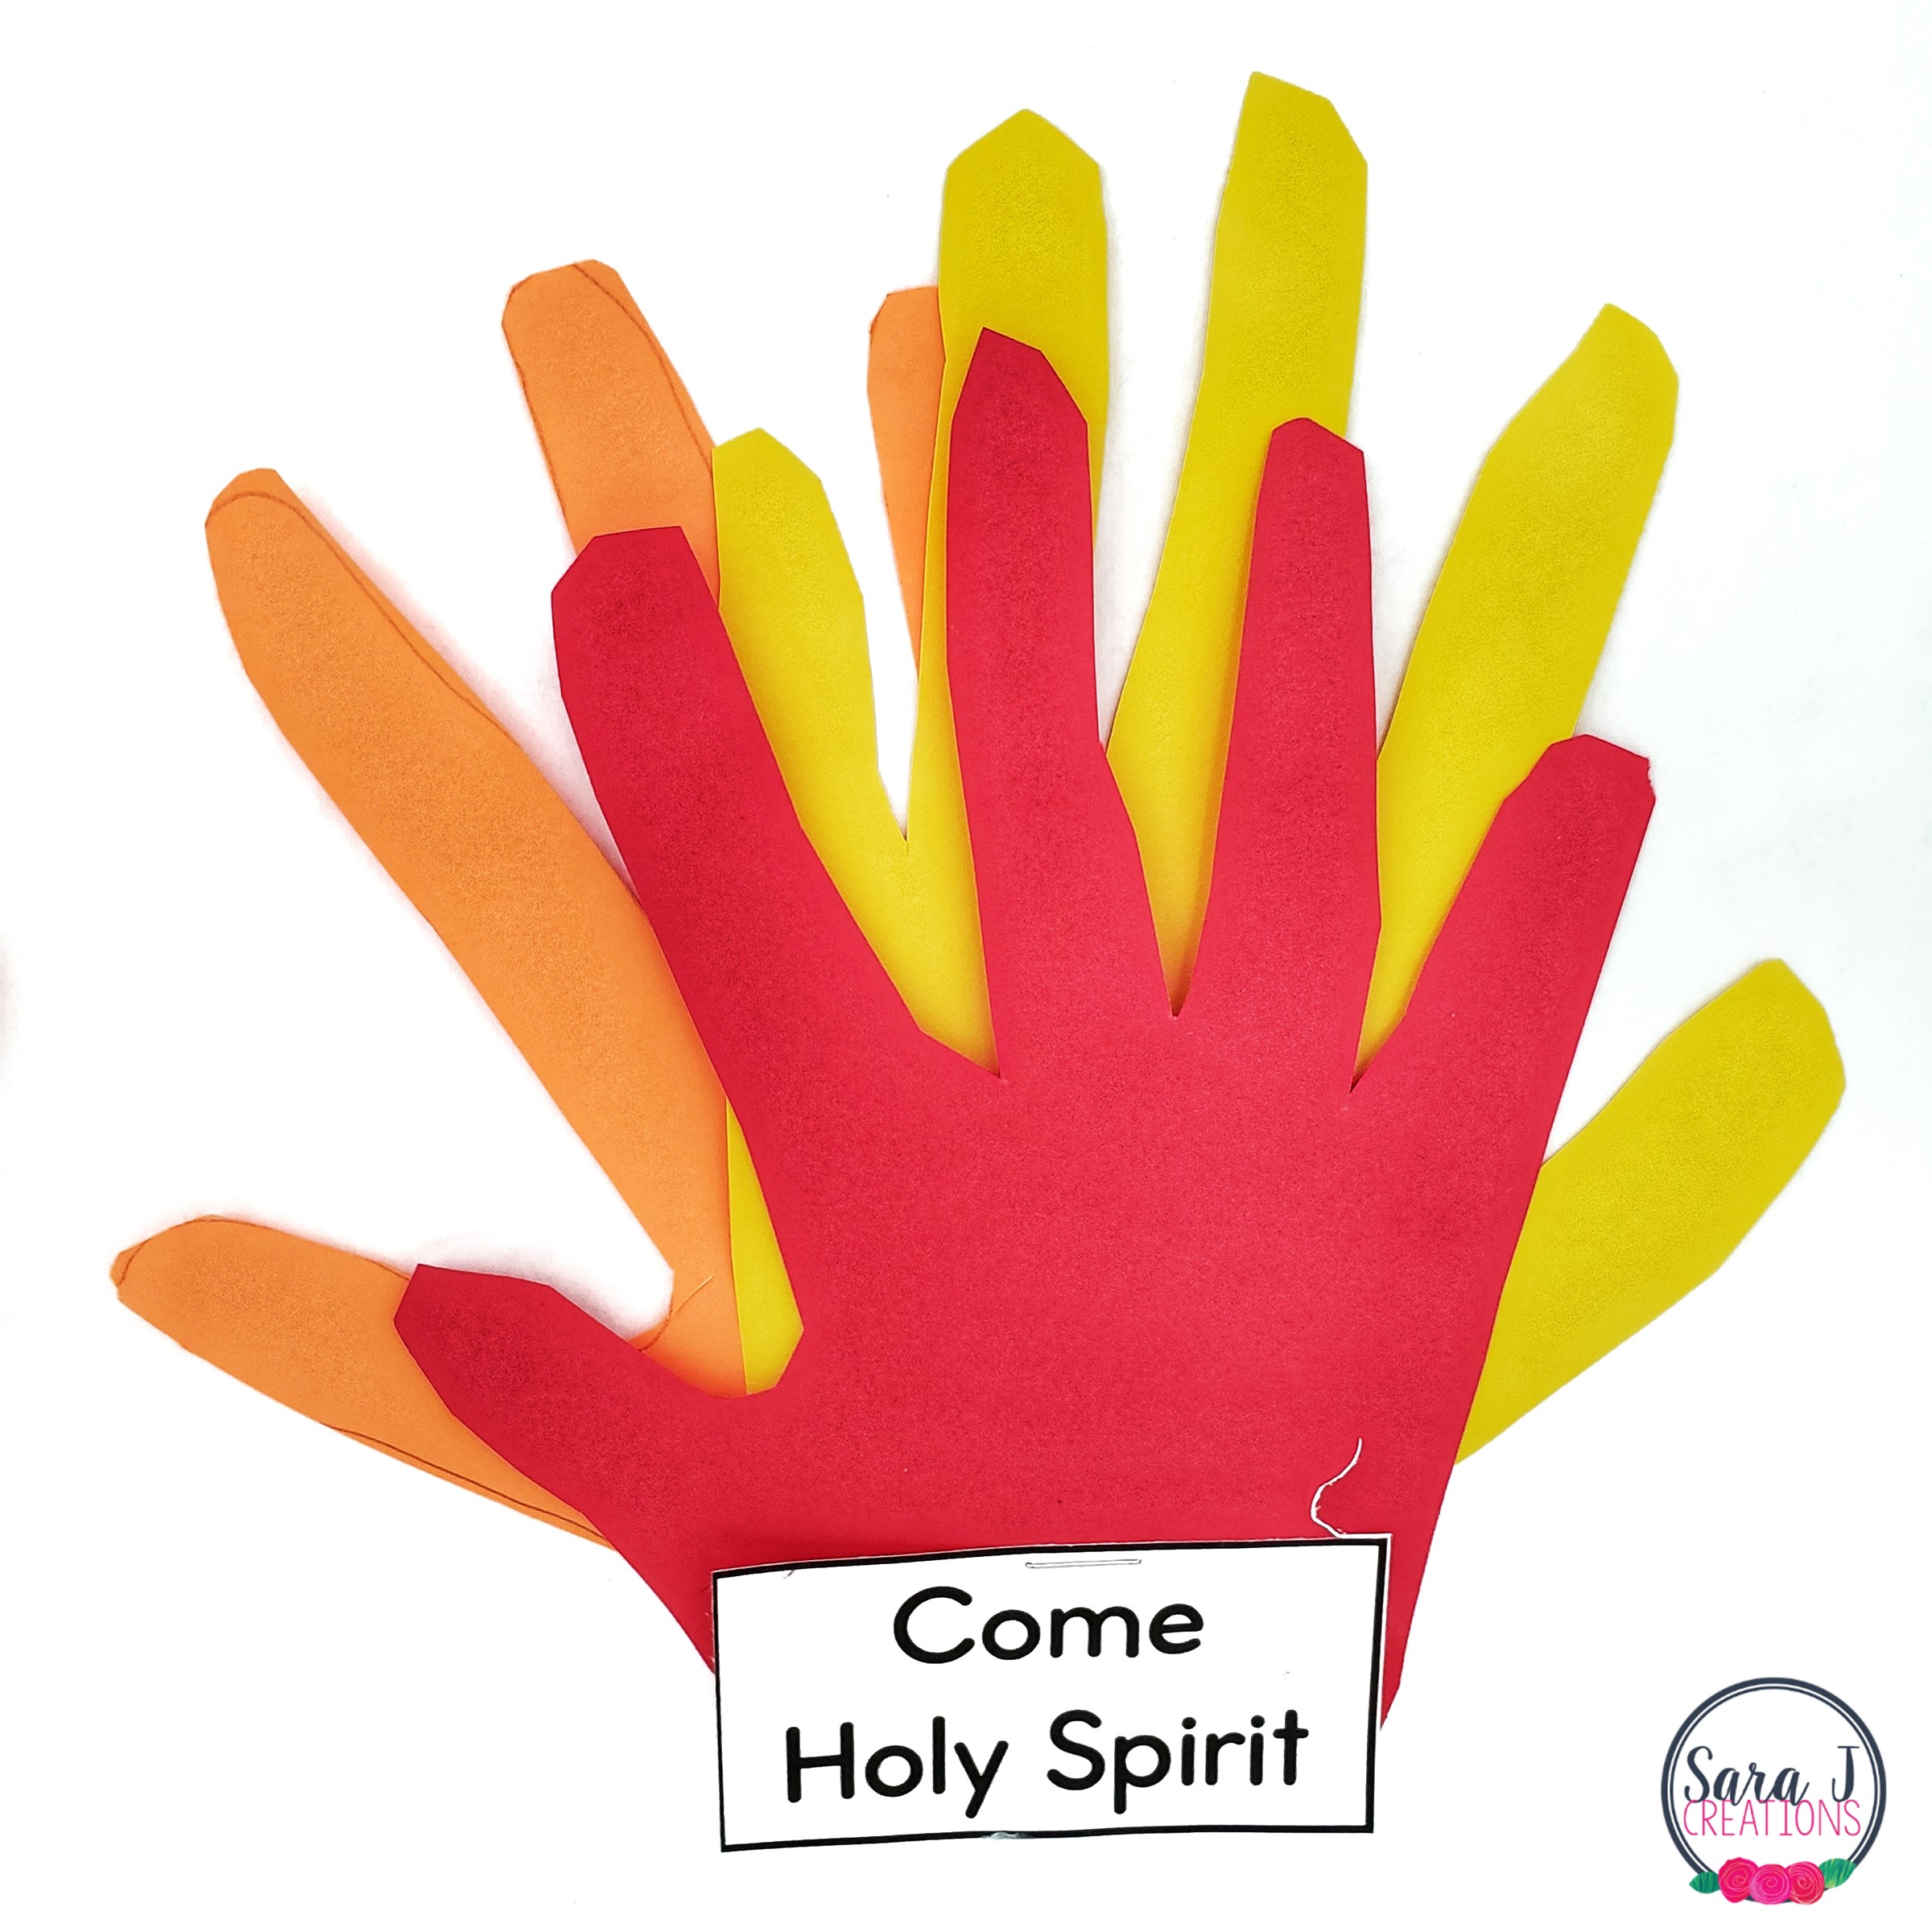 Handprint fire for the Holy Spirit